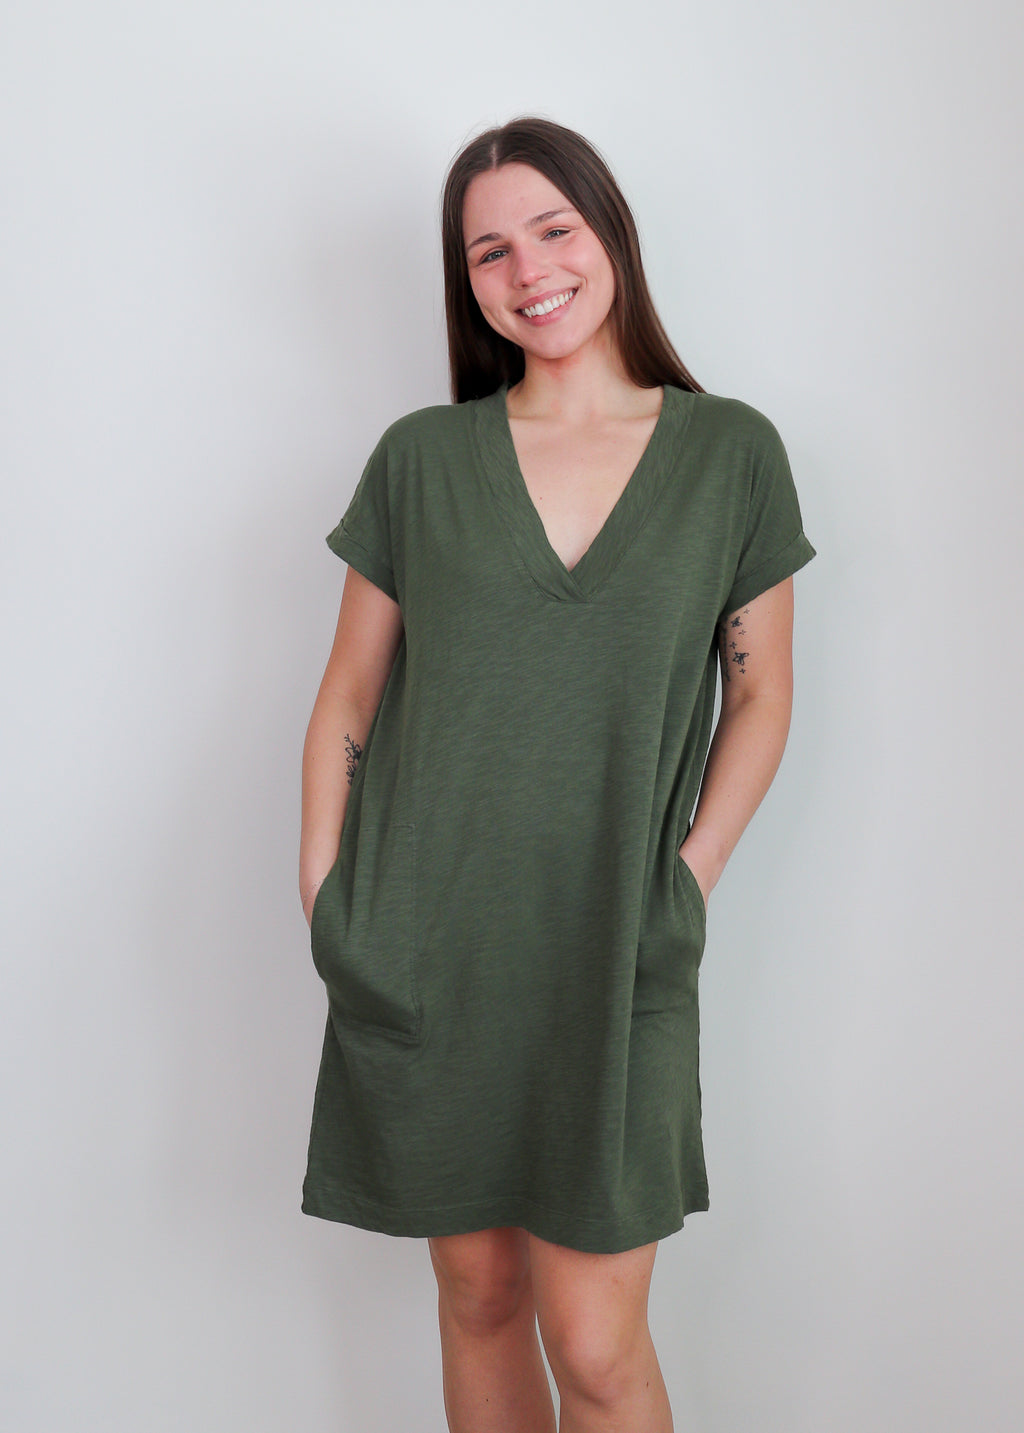 Dolman V-Neck Dress—Garden Green**FINAL SALE**